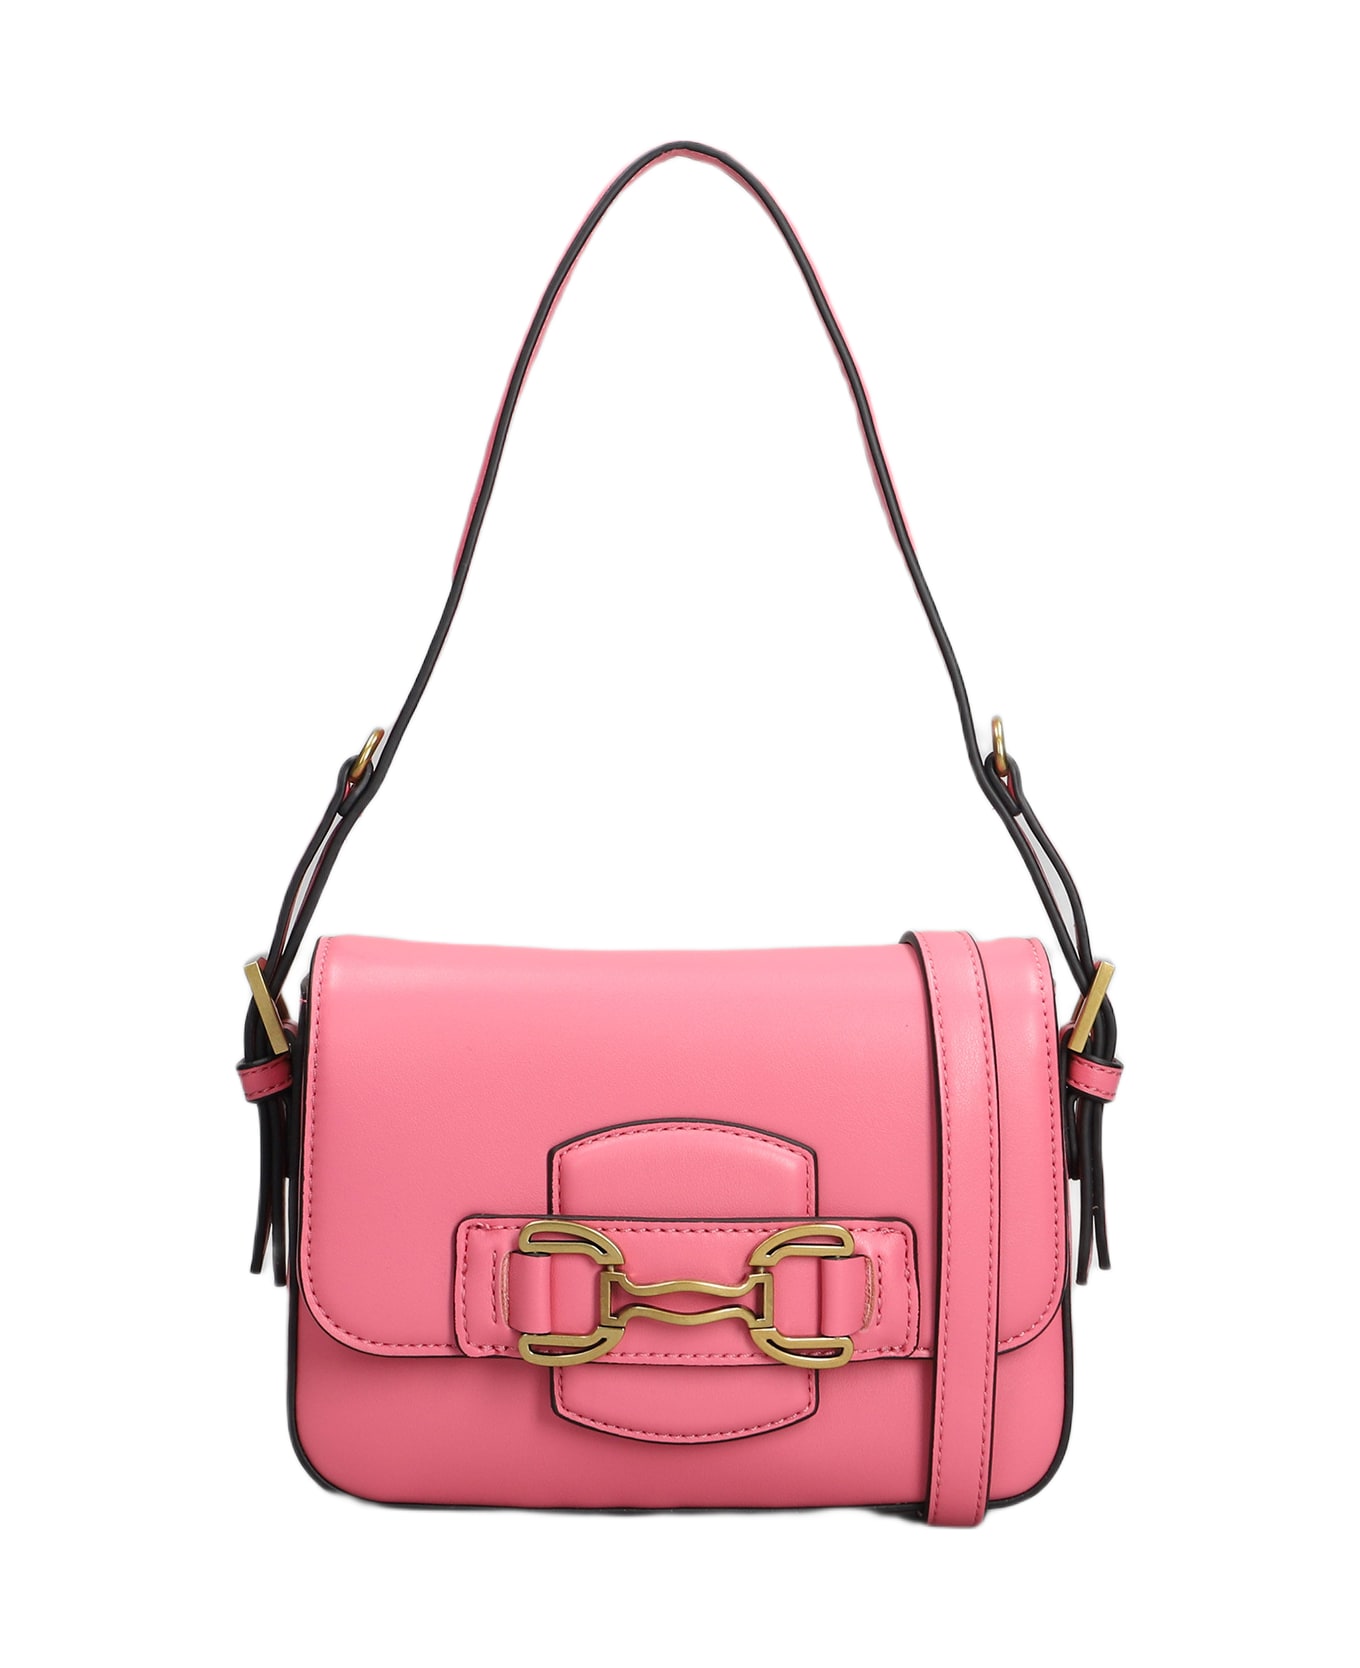 Bibi Lou Shoulder Bag In Rose-pink Leather - rose-pink ショルダーバッグ